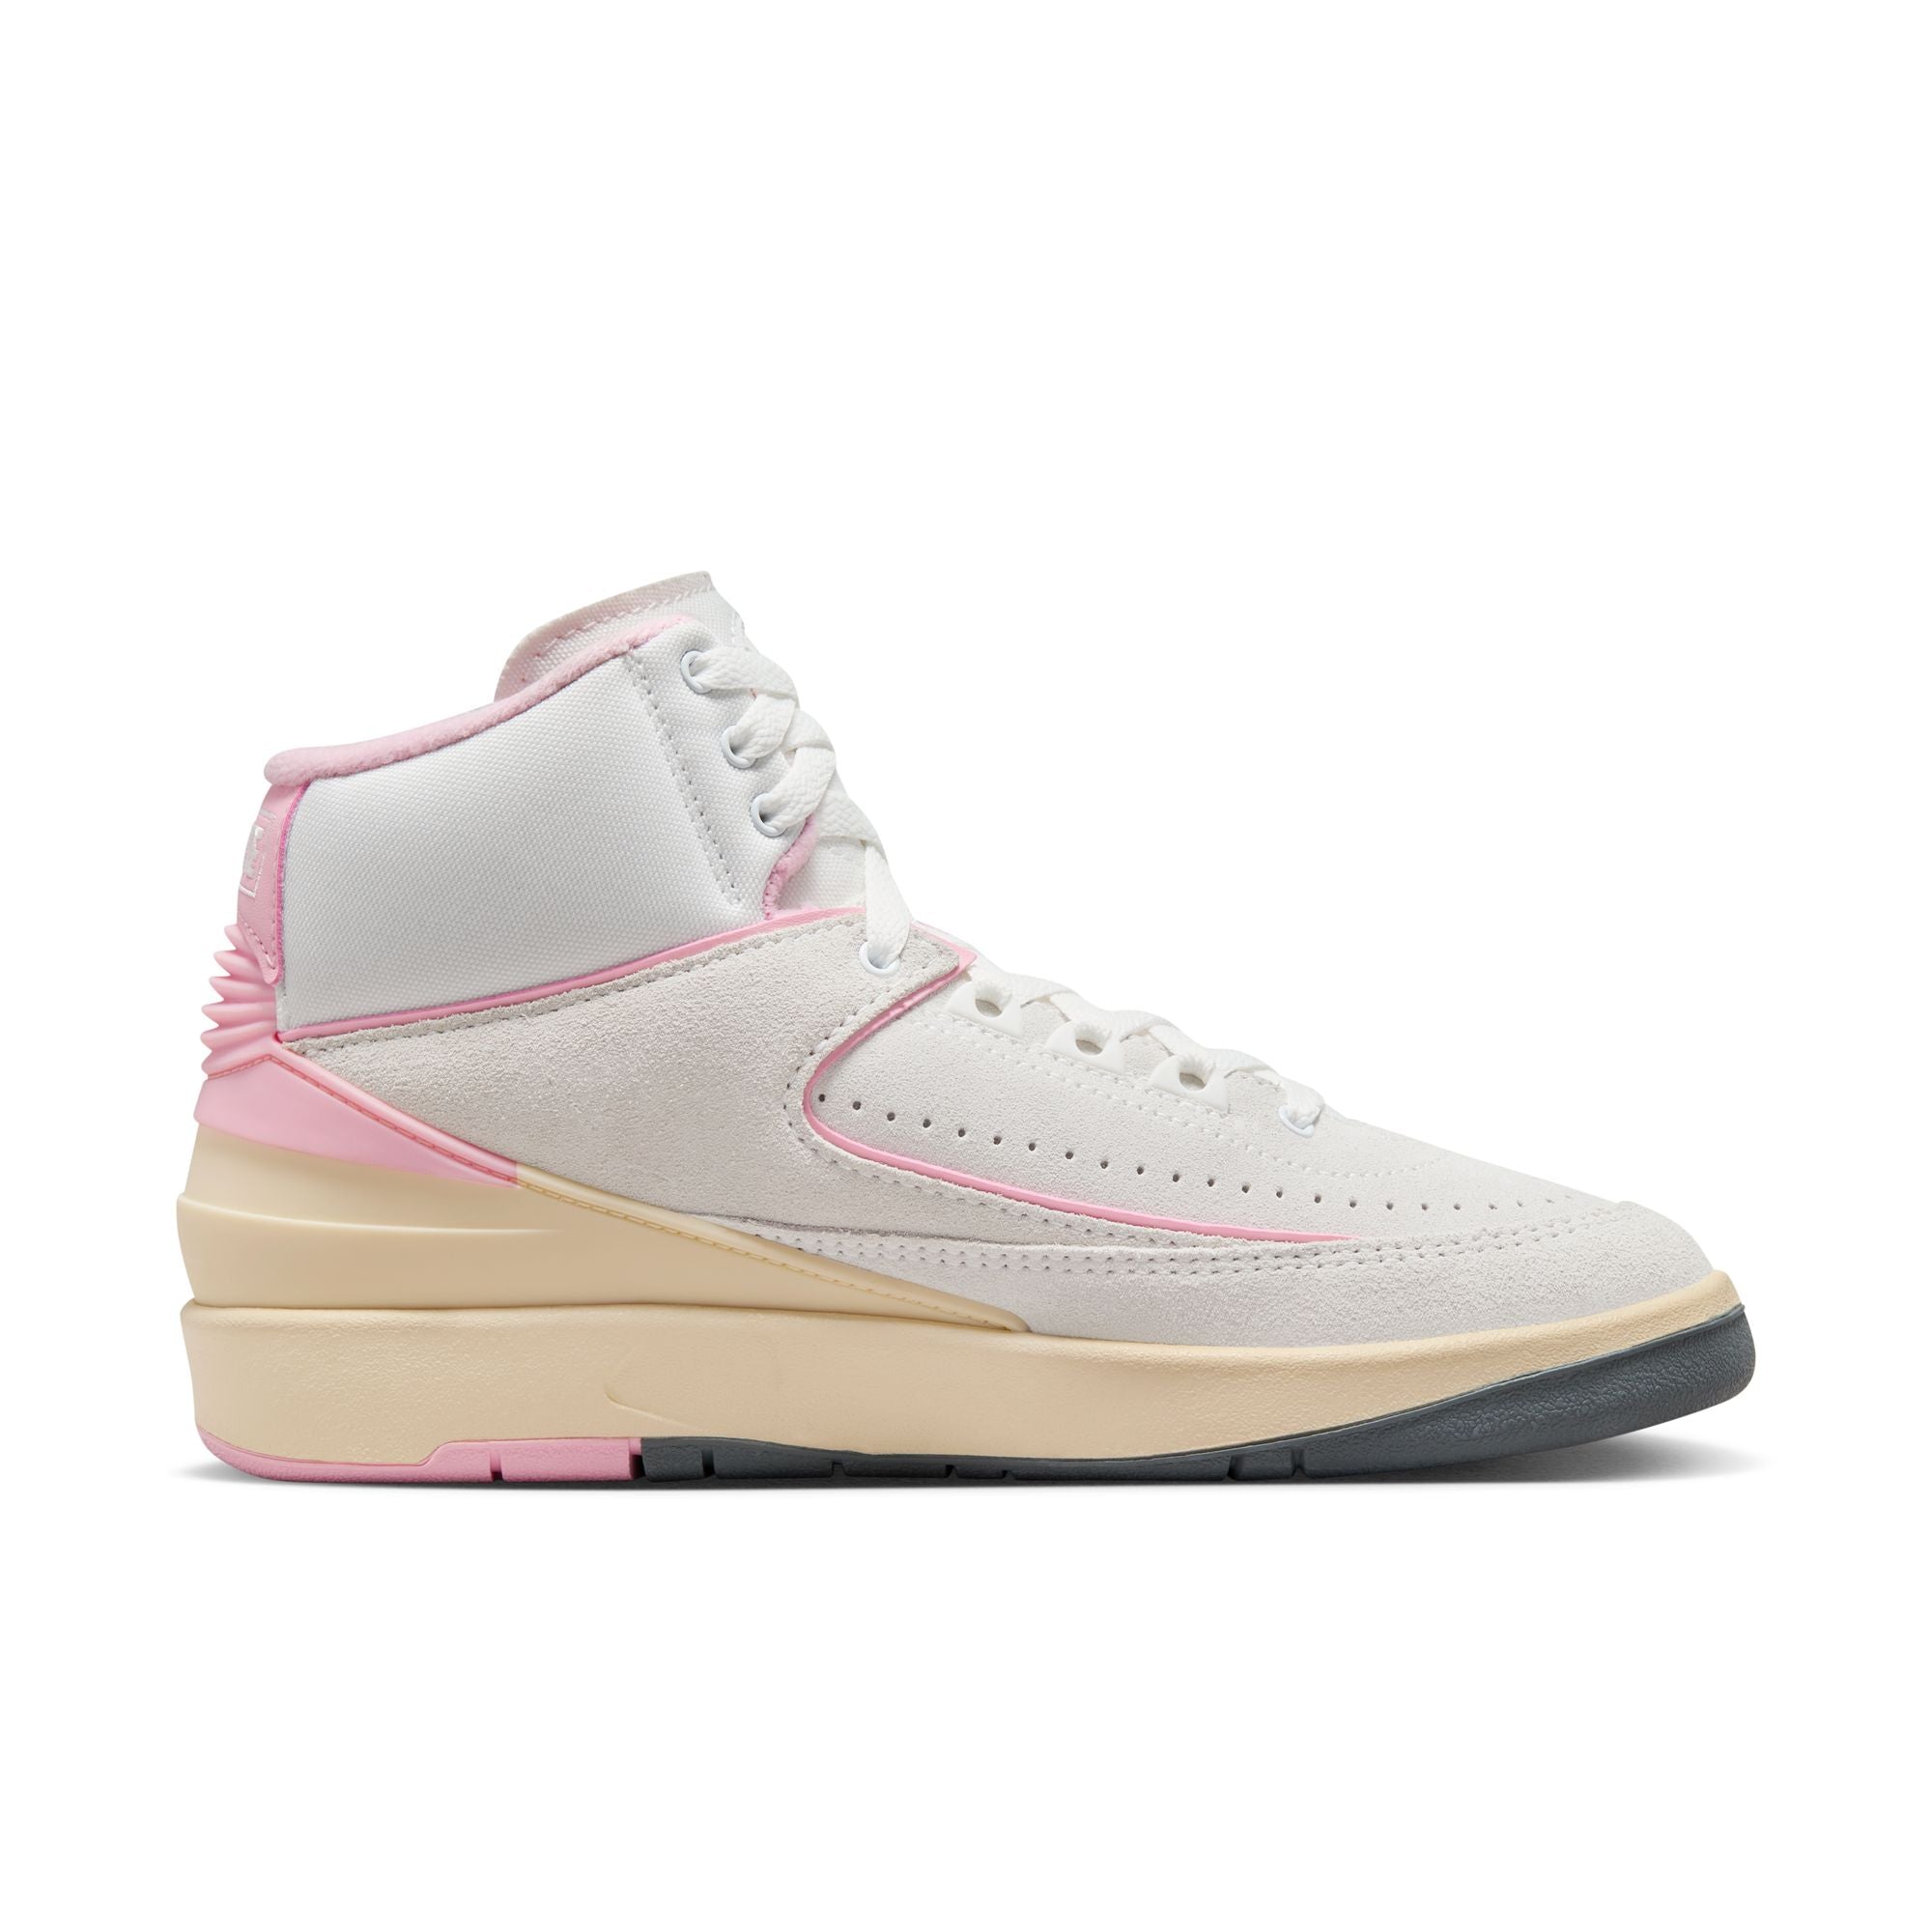 Womens Air Jordan 2 Retro 'Soft Pink'